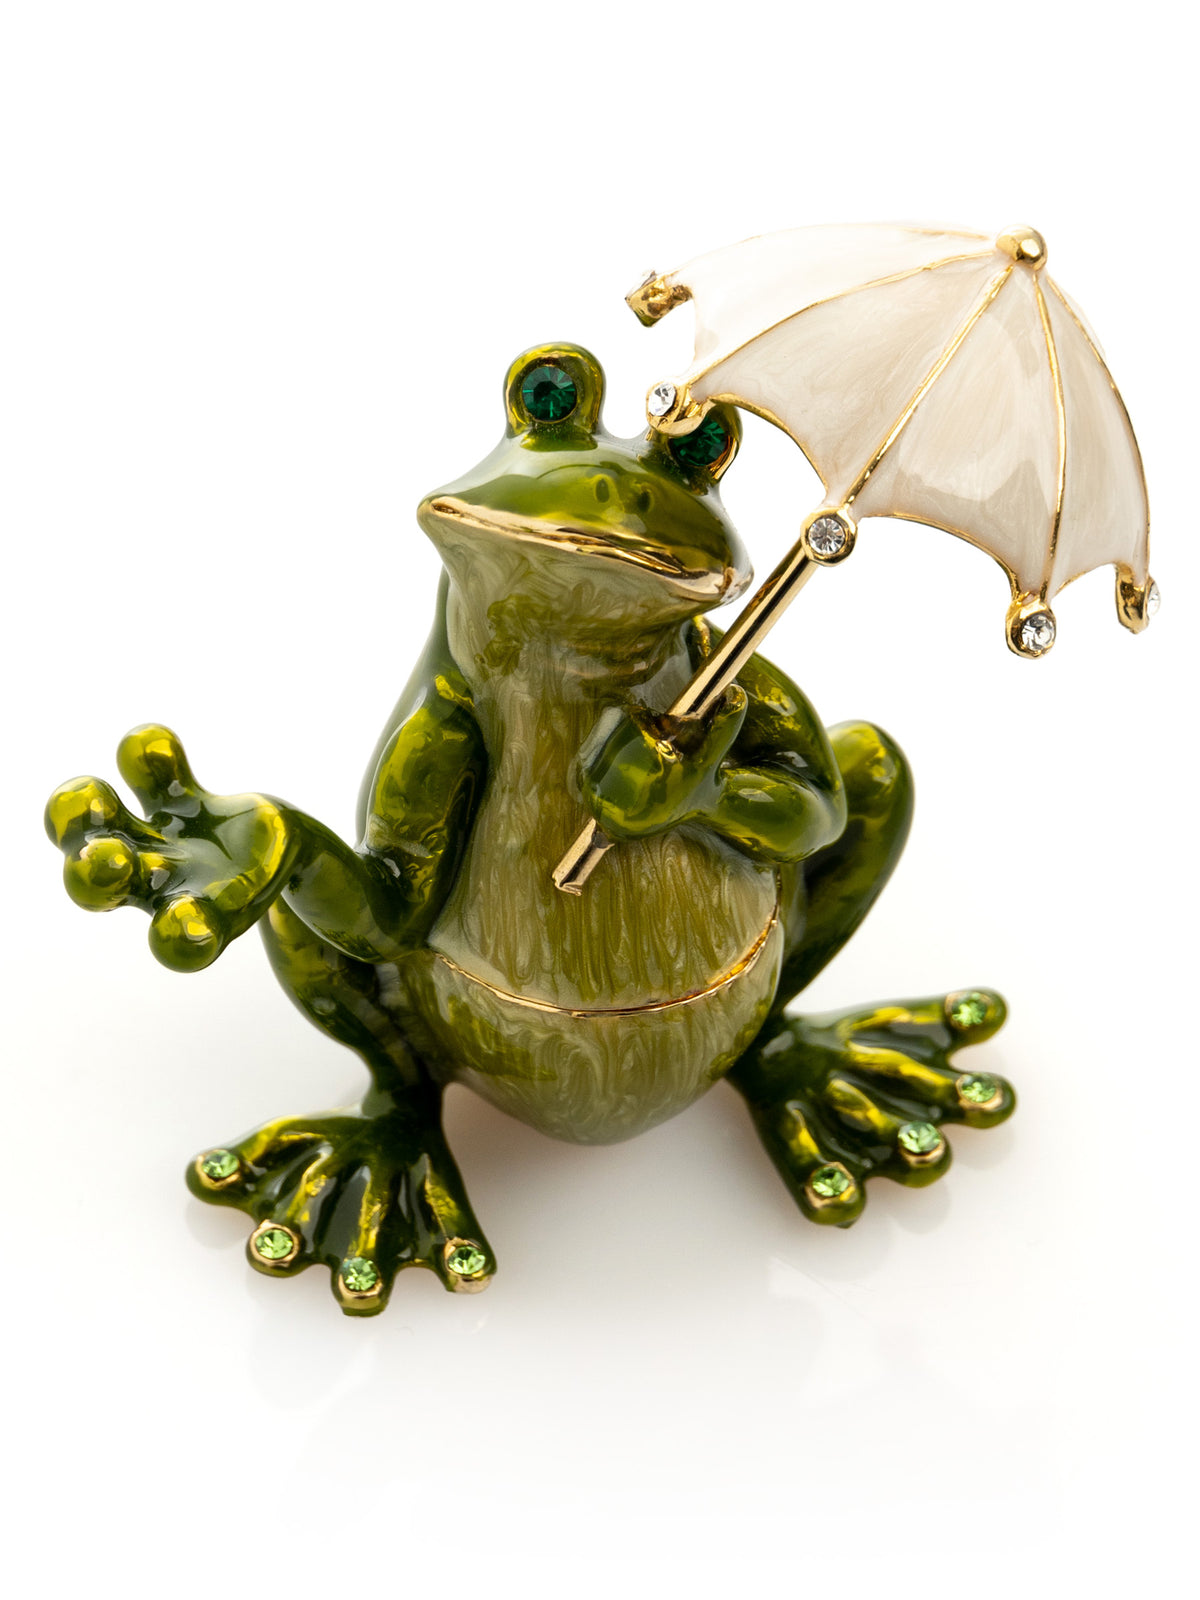 Frog holding an umbrella